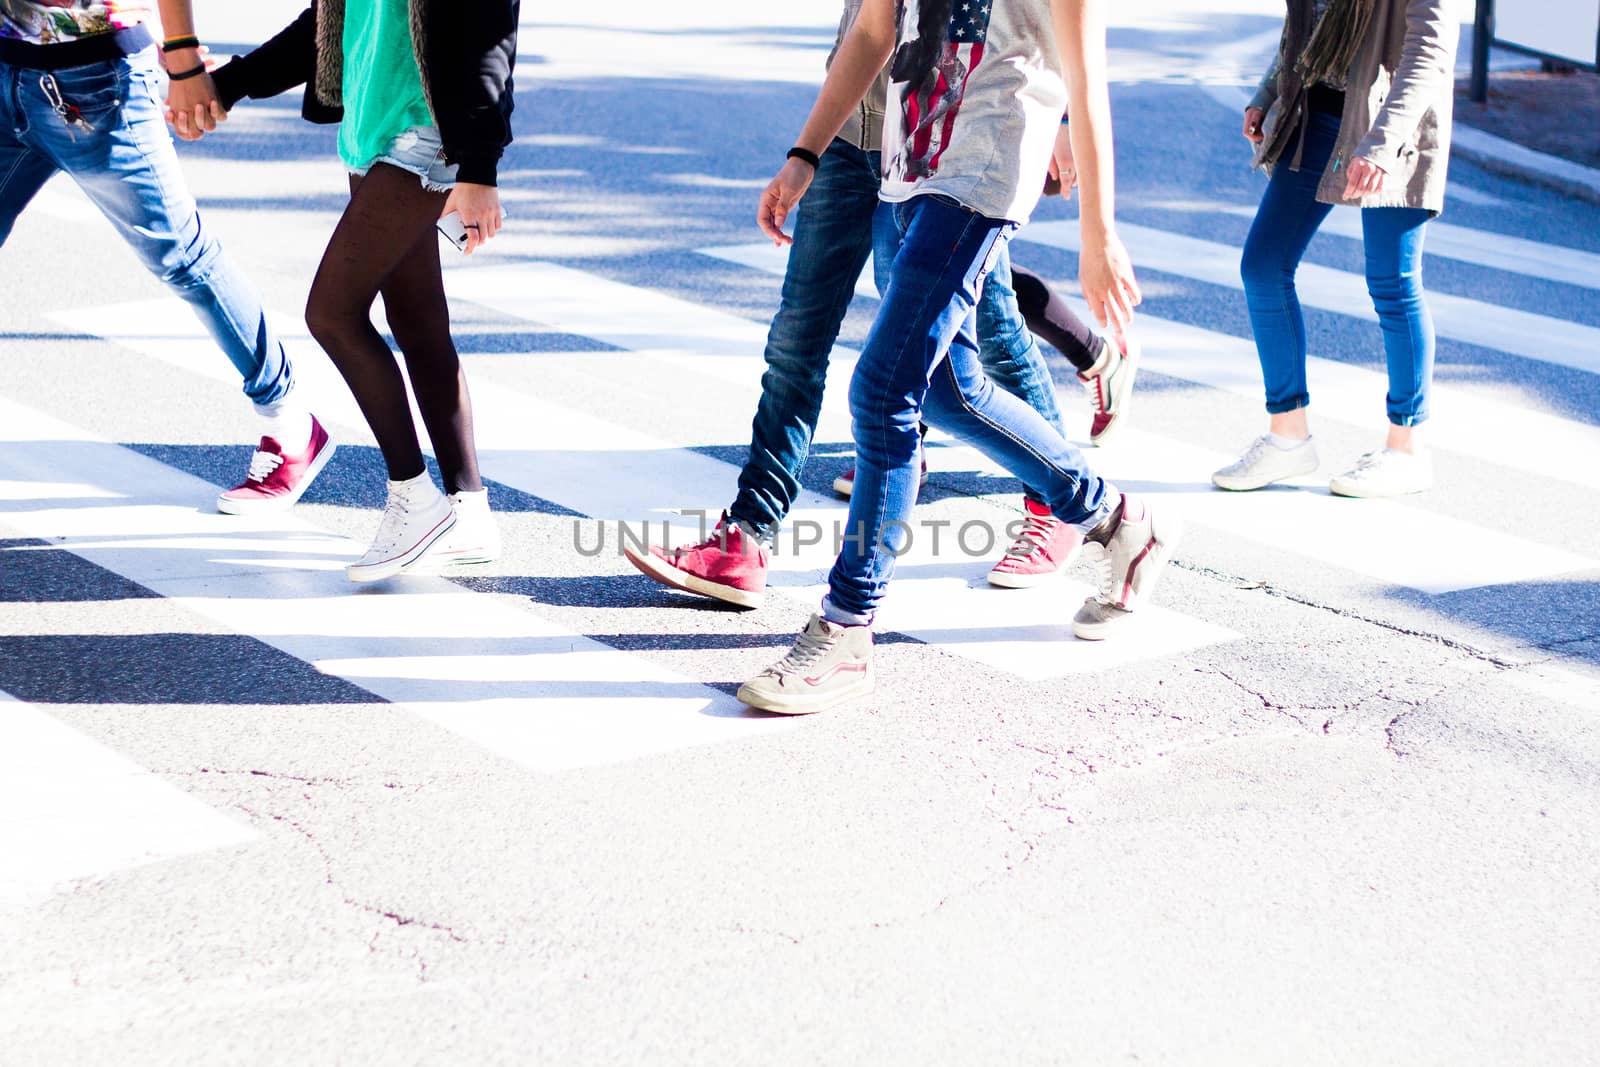 boys crossing the pedestrian crossing by Carbonas